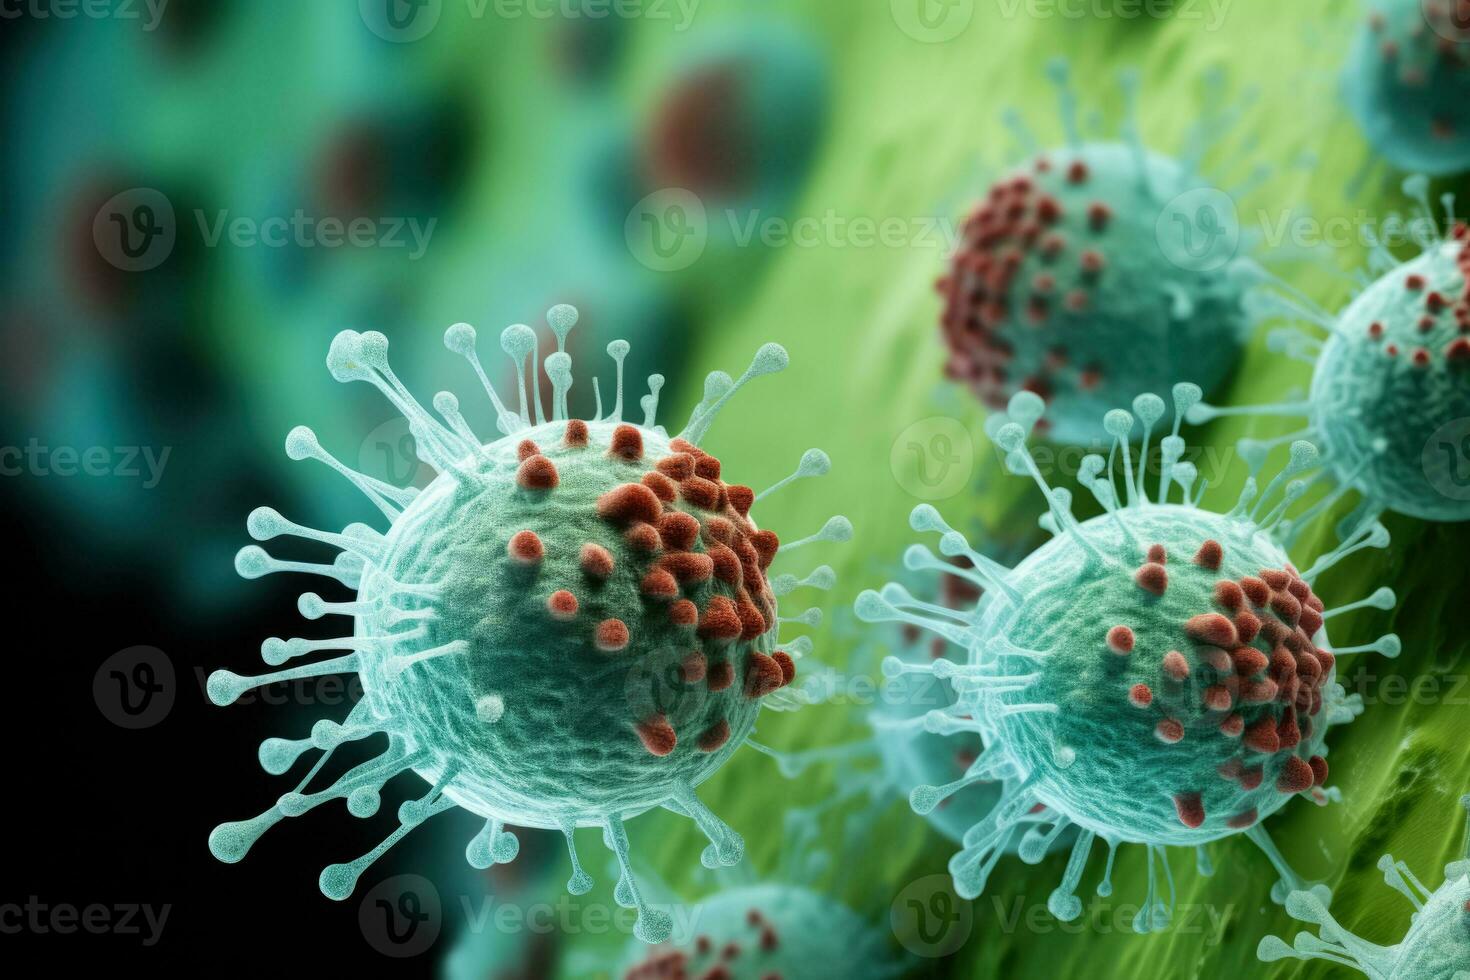 Macro snapshot capturing virus infected cells under high resolution microscopic examination photo